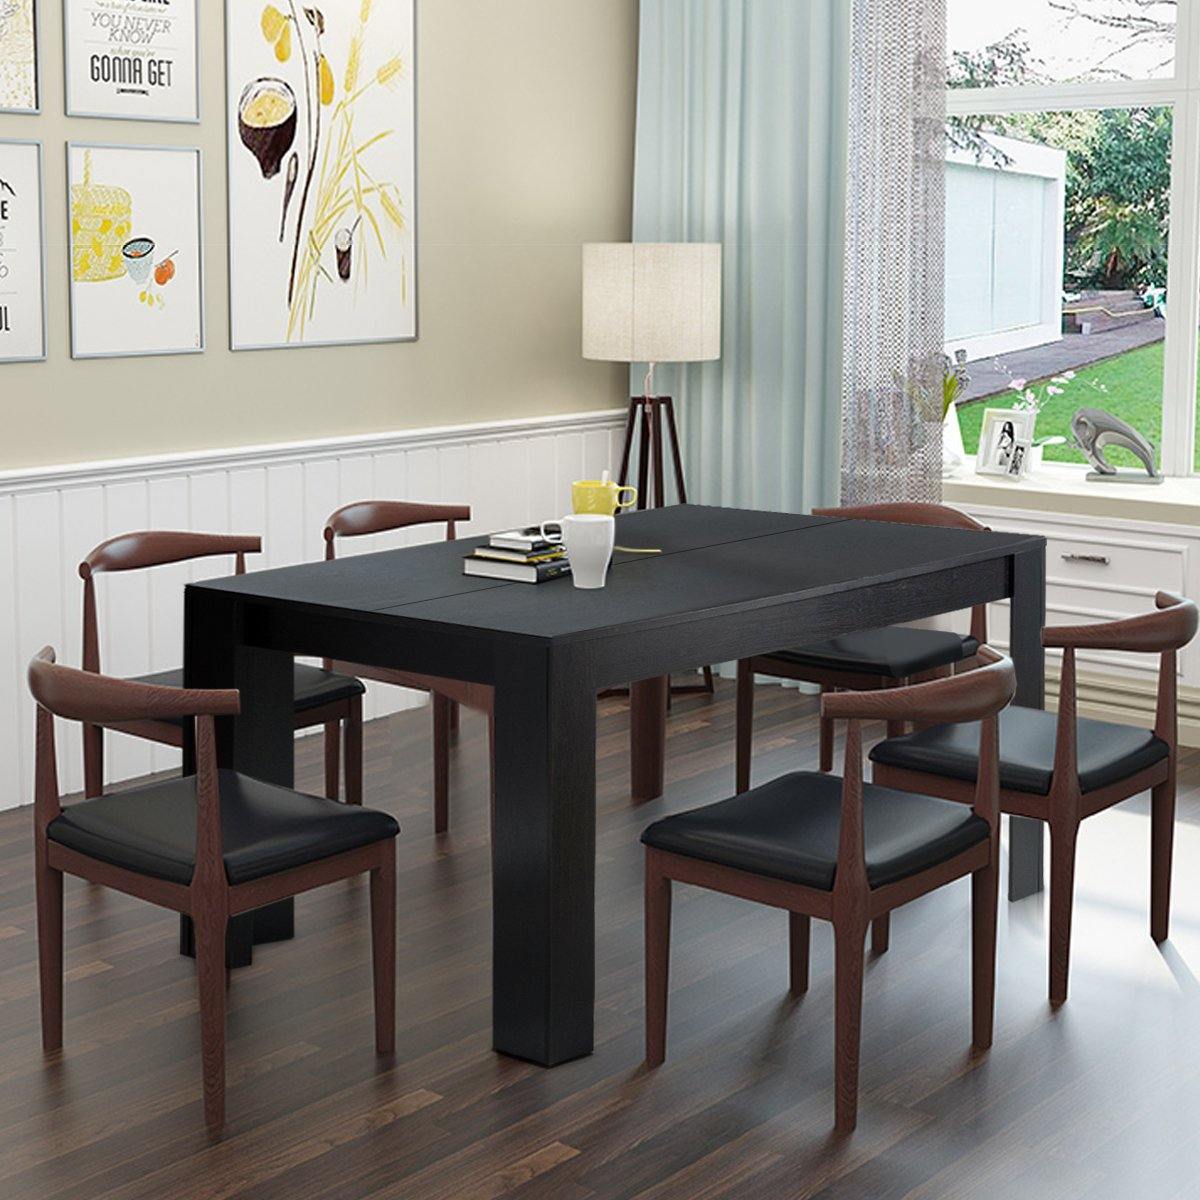 Dining Table, Wood Rectangular Table Dining Table 63" x 31.5" x 30" - Giantexus